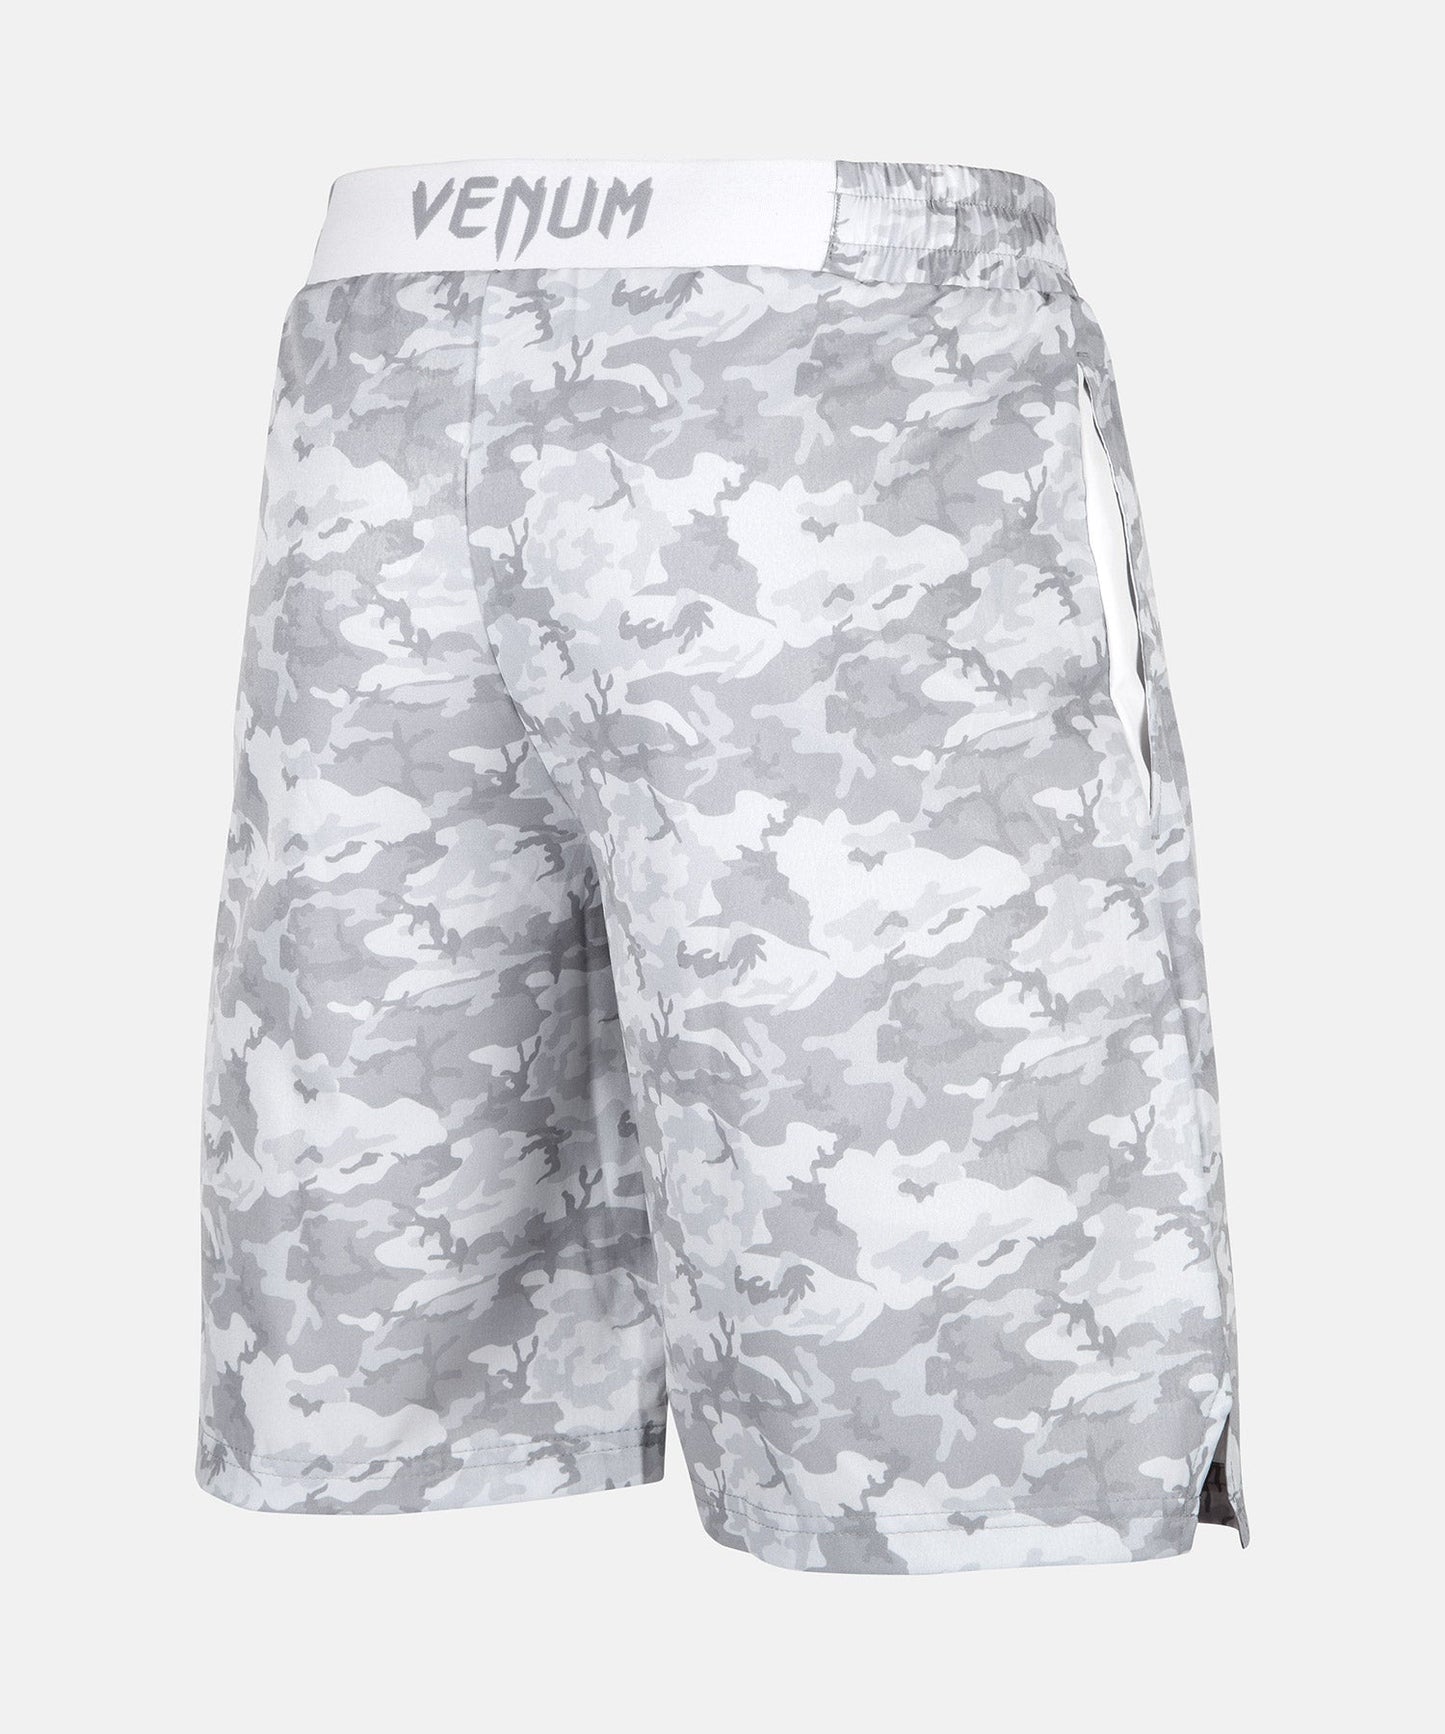 Venum Classic Training Shorts - White/Camo